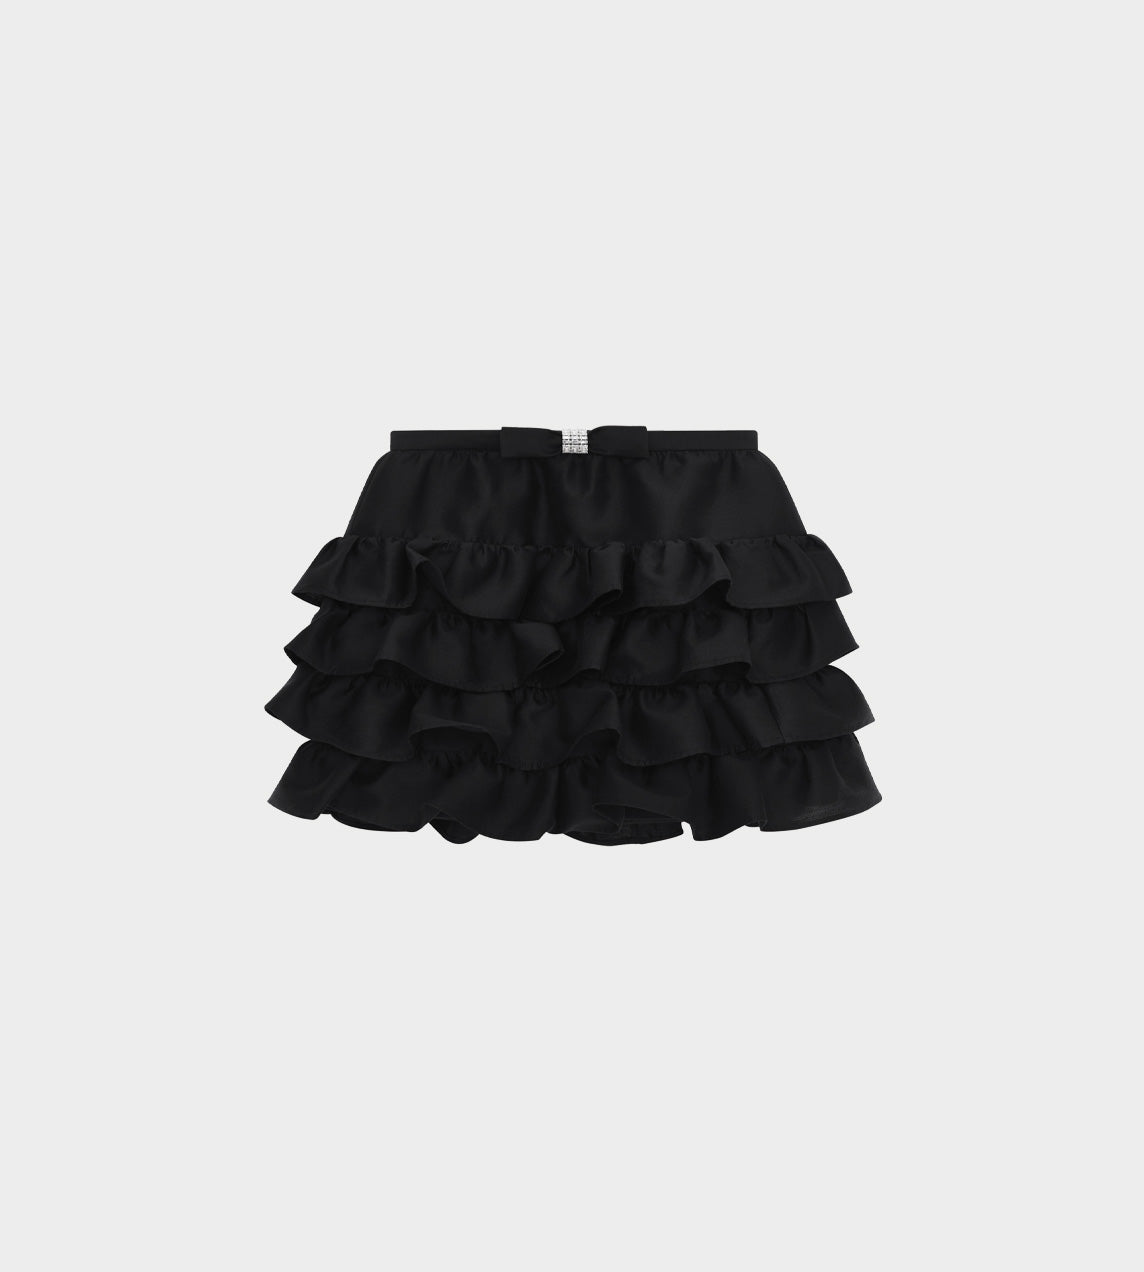 ShuShu/Tong - Multi Layered Ruffle Skirt Black